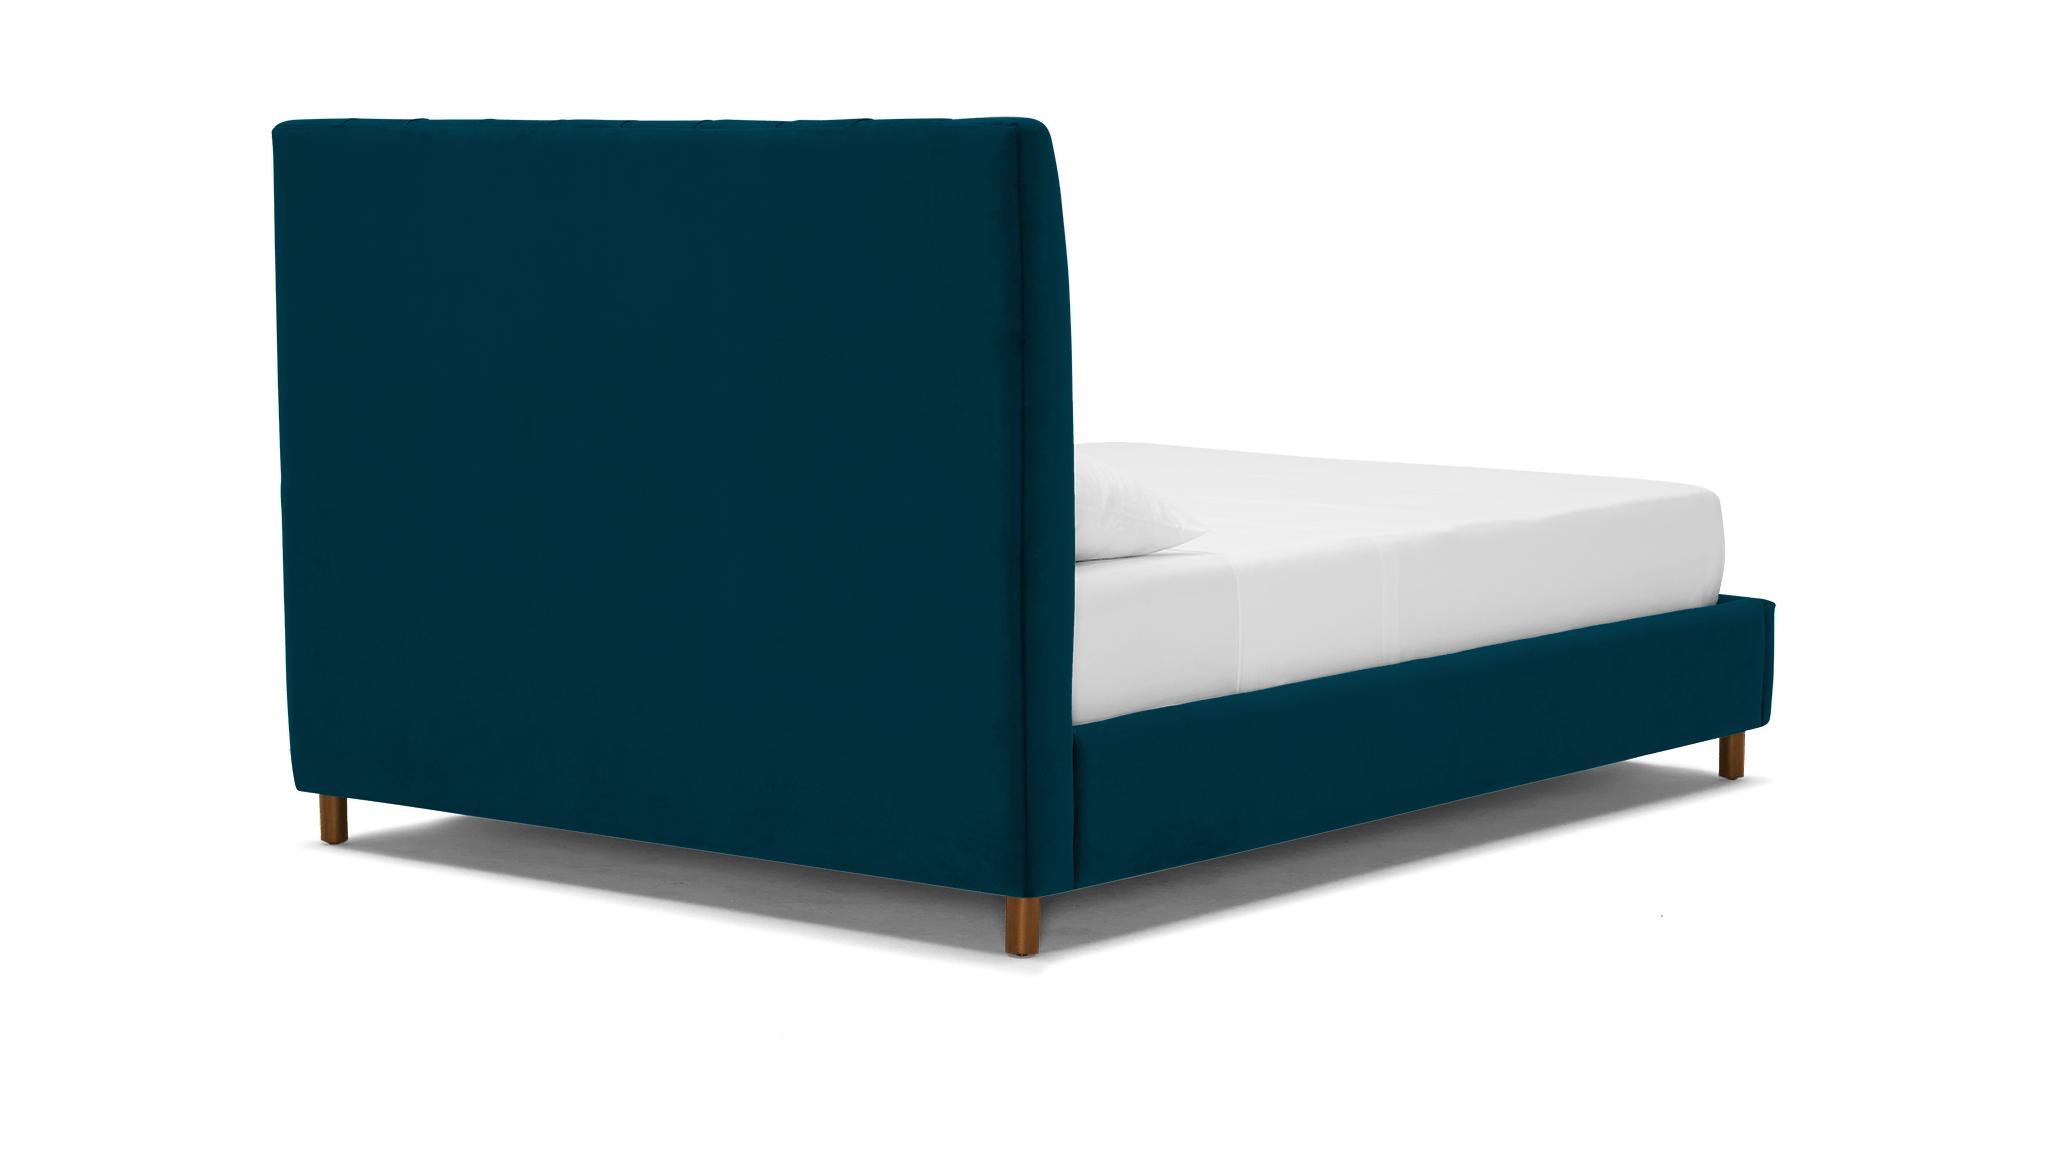 Blue Lotta Mid Century Modern Bed - Key Largo Zenith Teal - Mocha - Cal King - Image 3